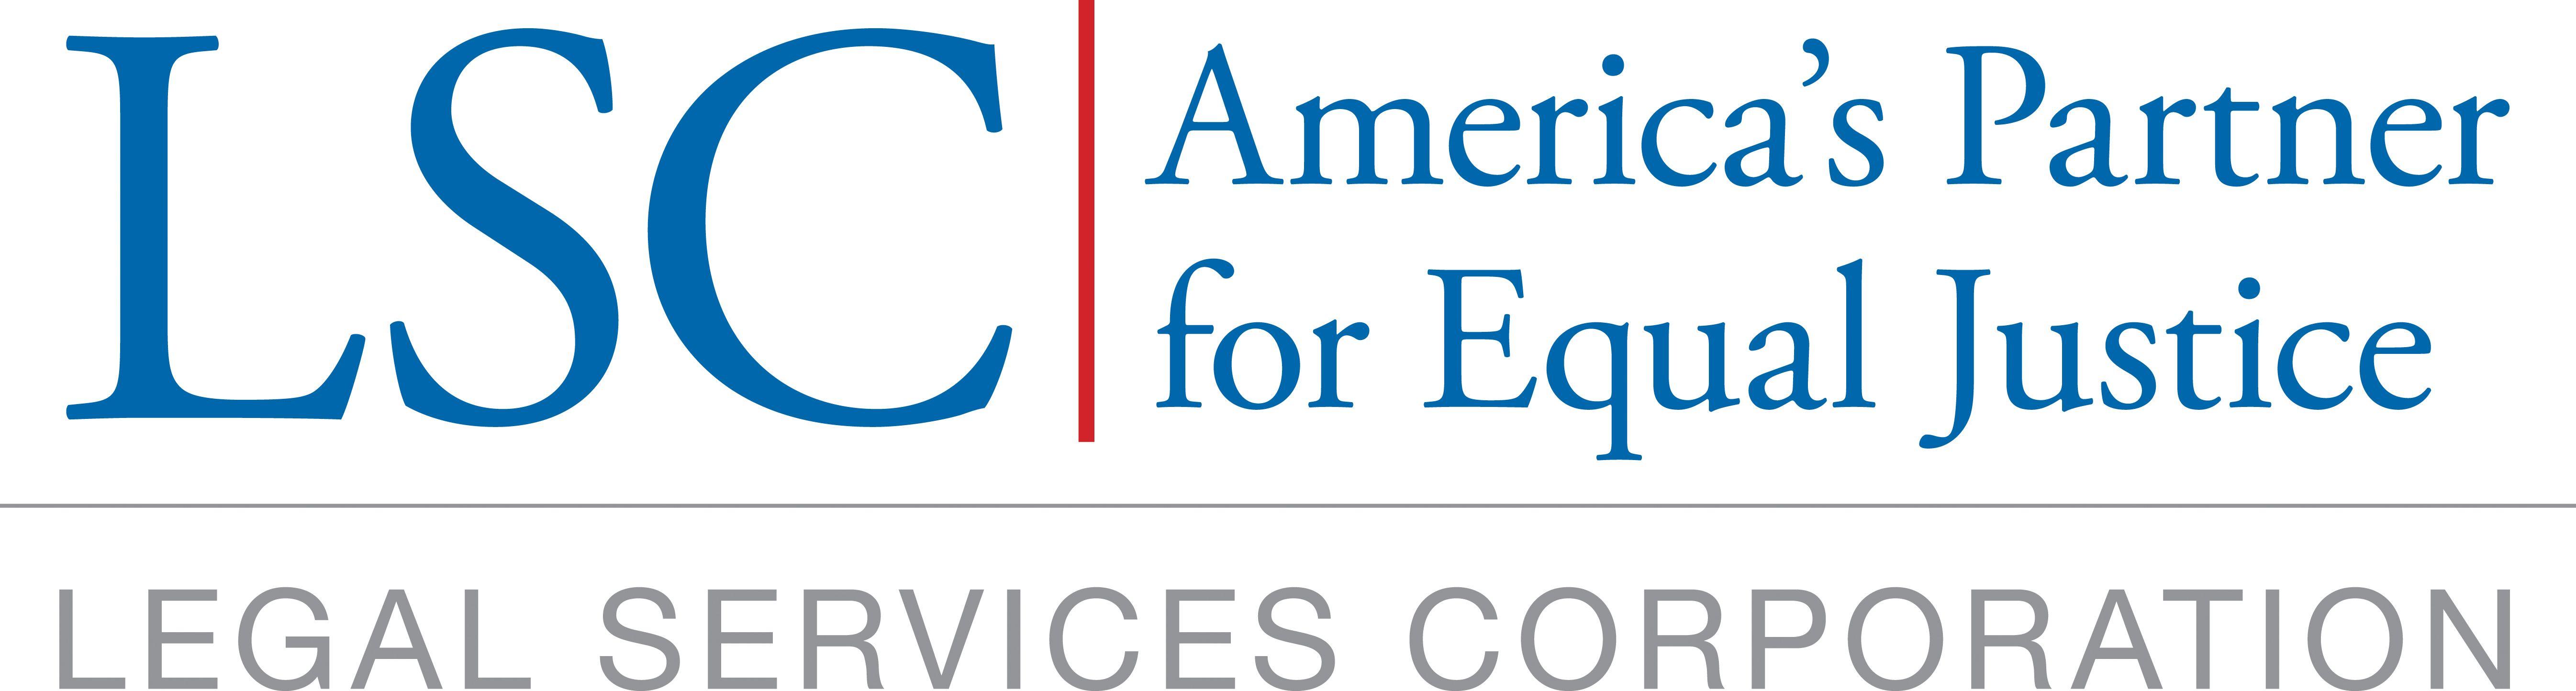 Legal Service Logo - Media Assets | LSC - Legal Services Corporation: America's Partner ...